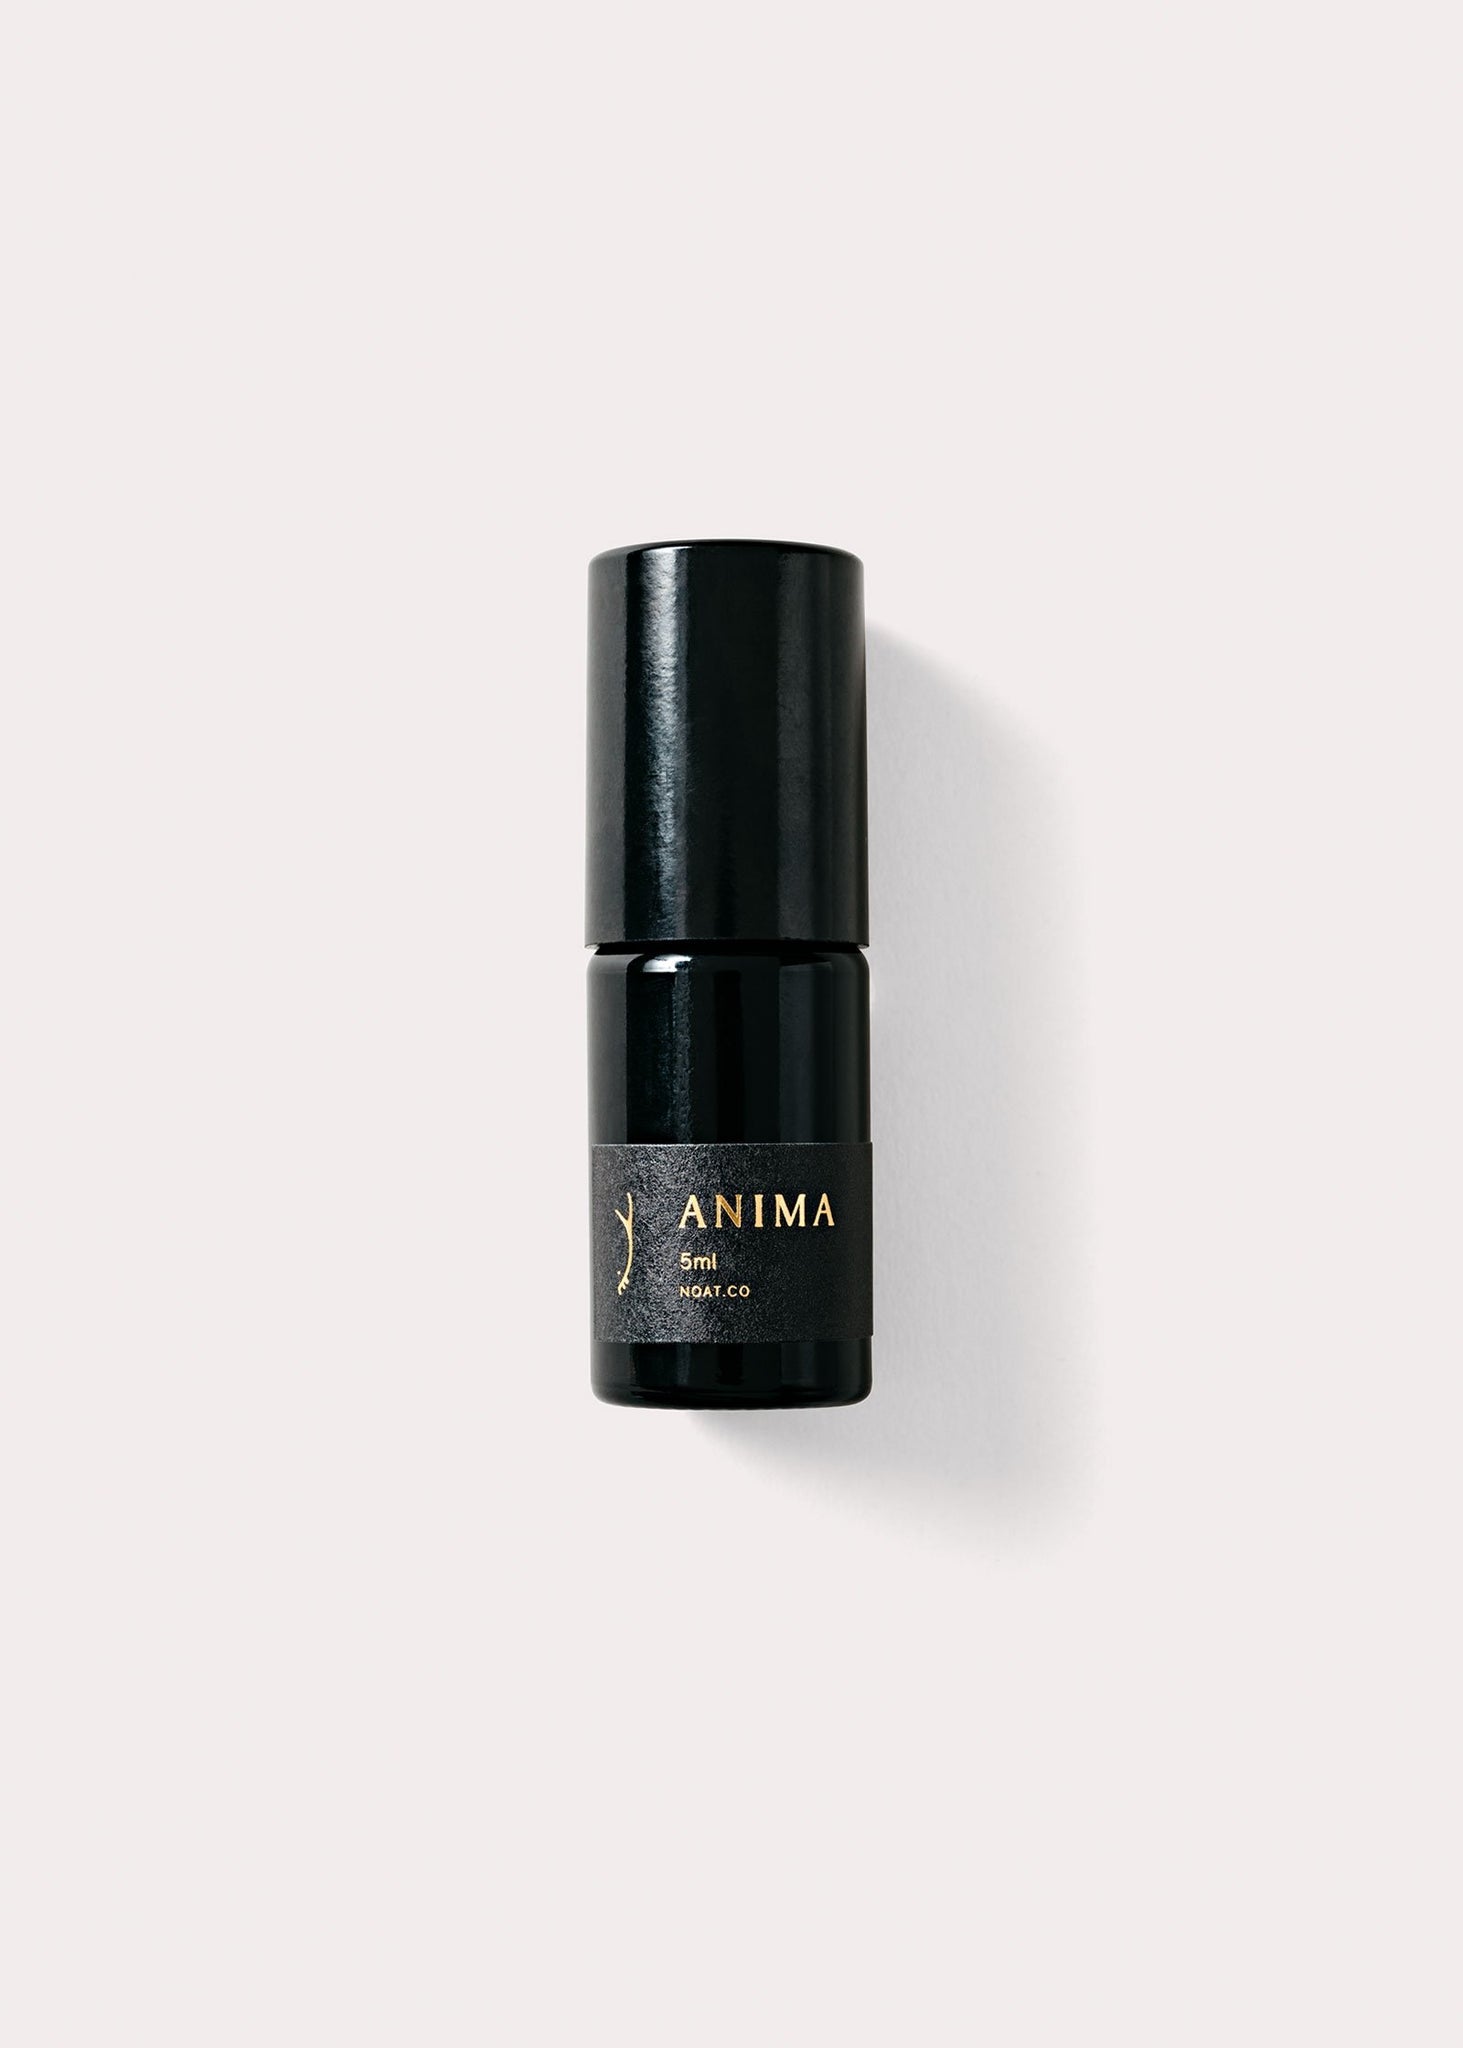 Anima Fragrance - Noat